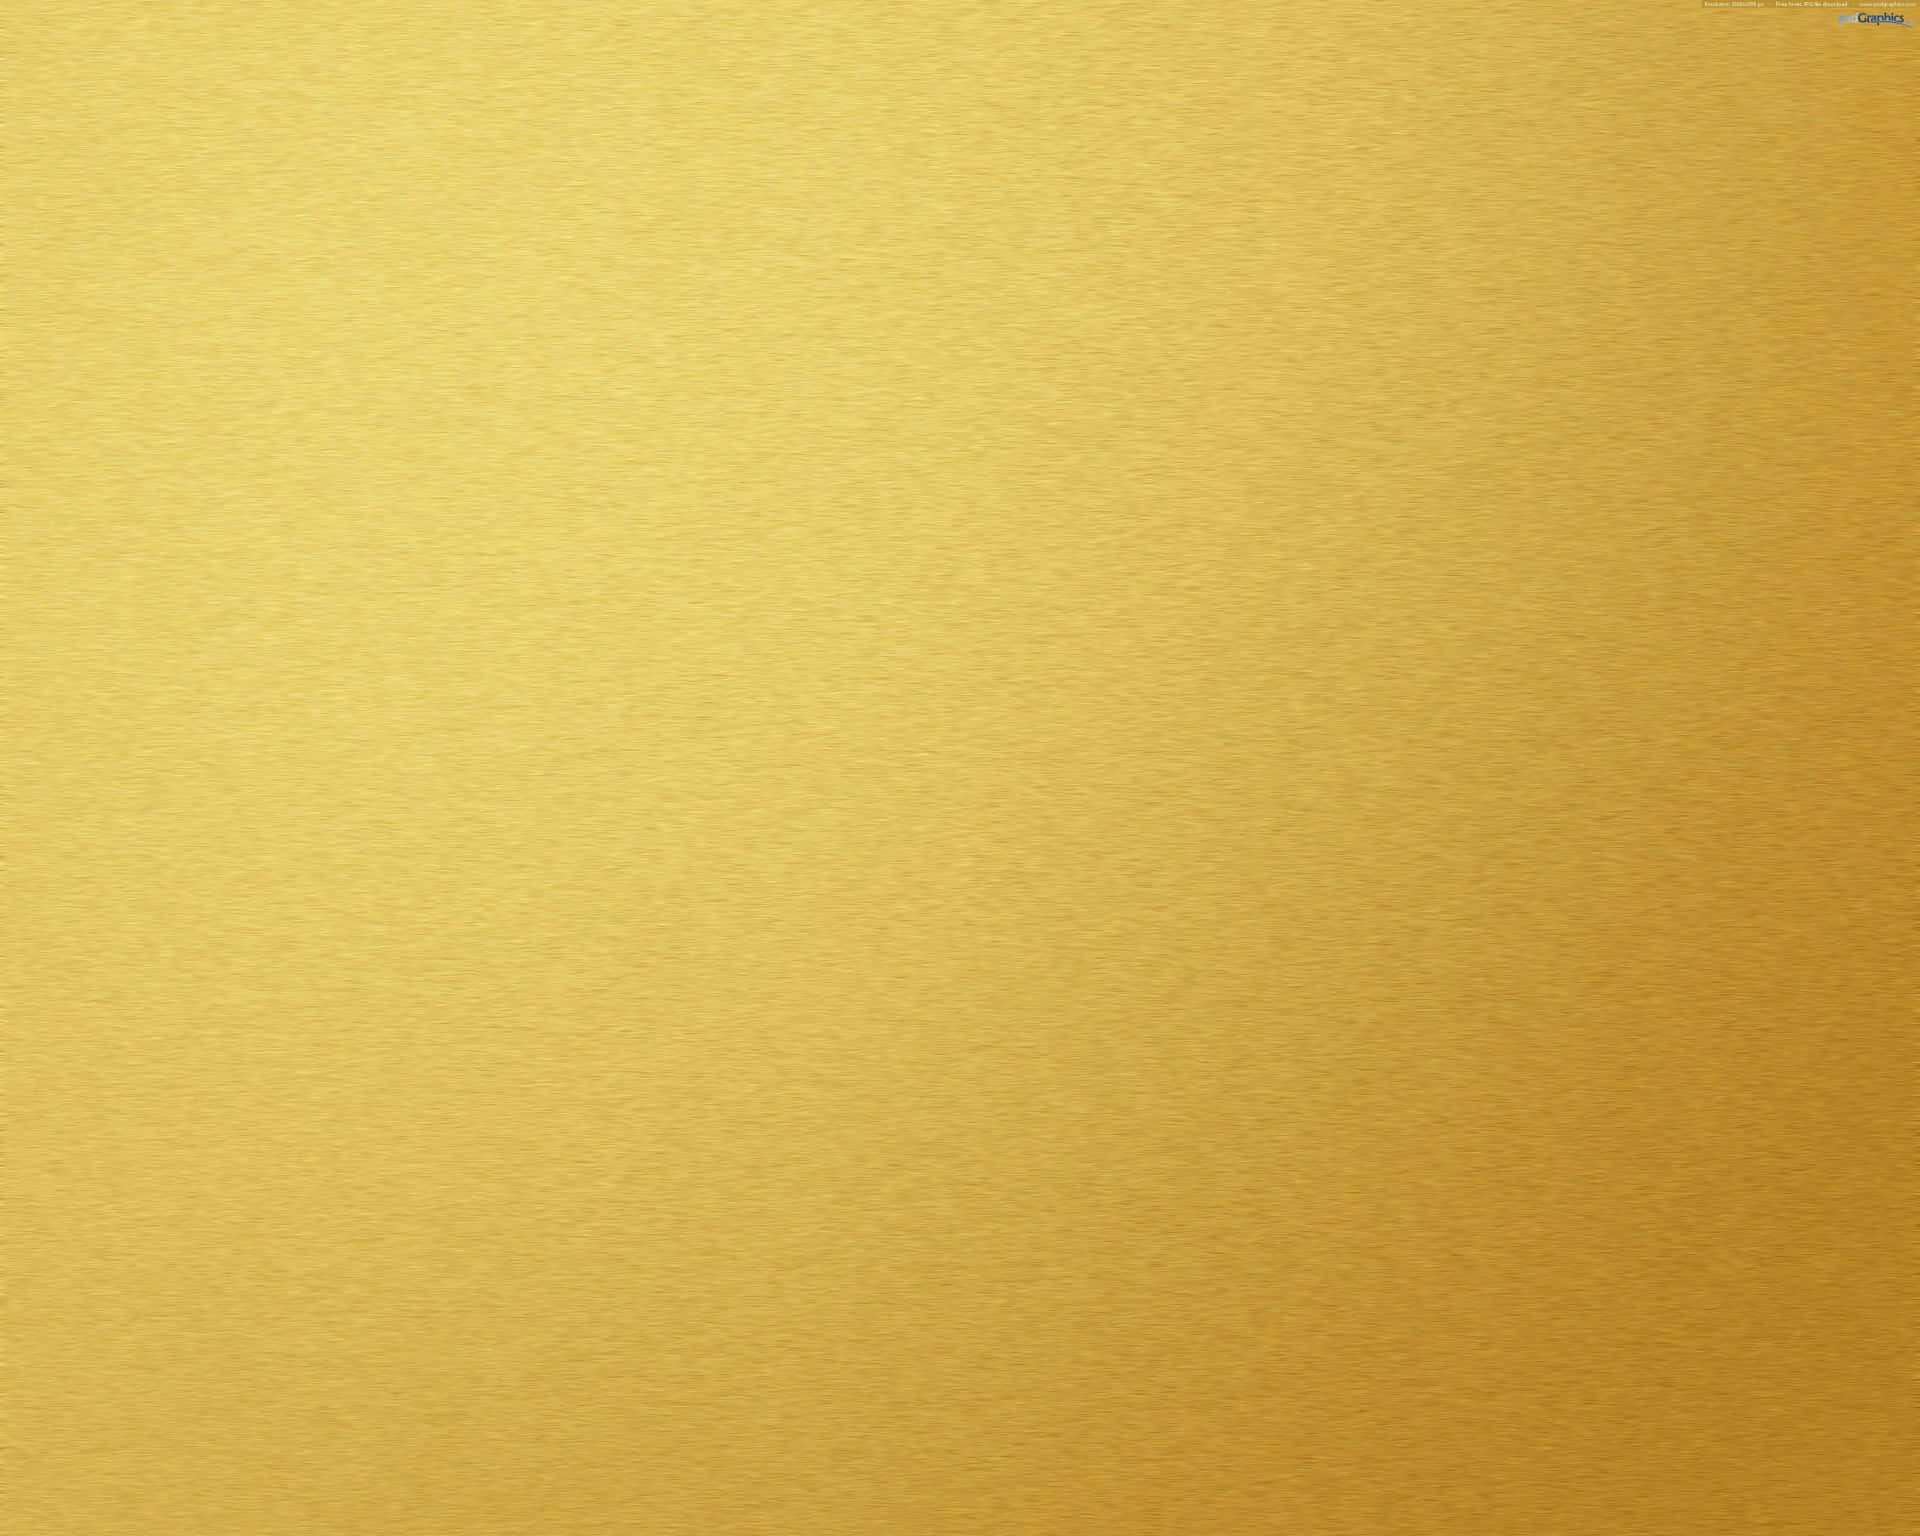 Simple Gradient Gold Texture Picture